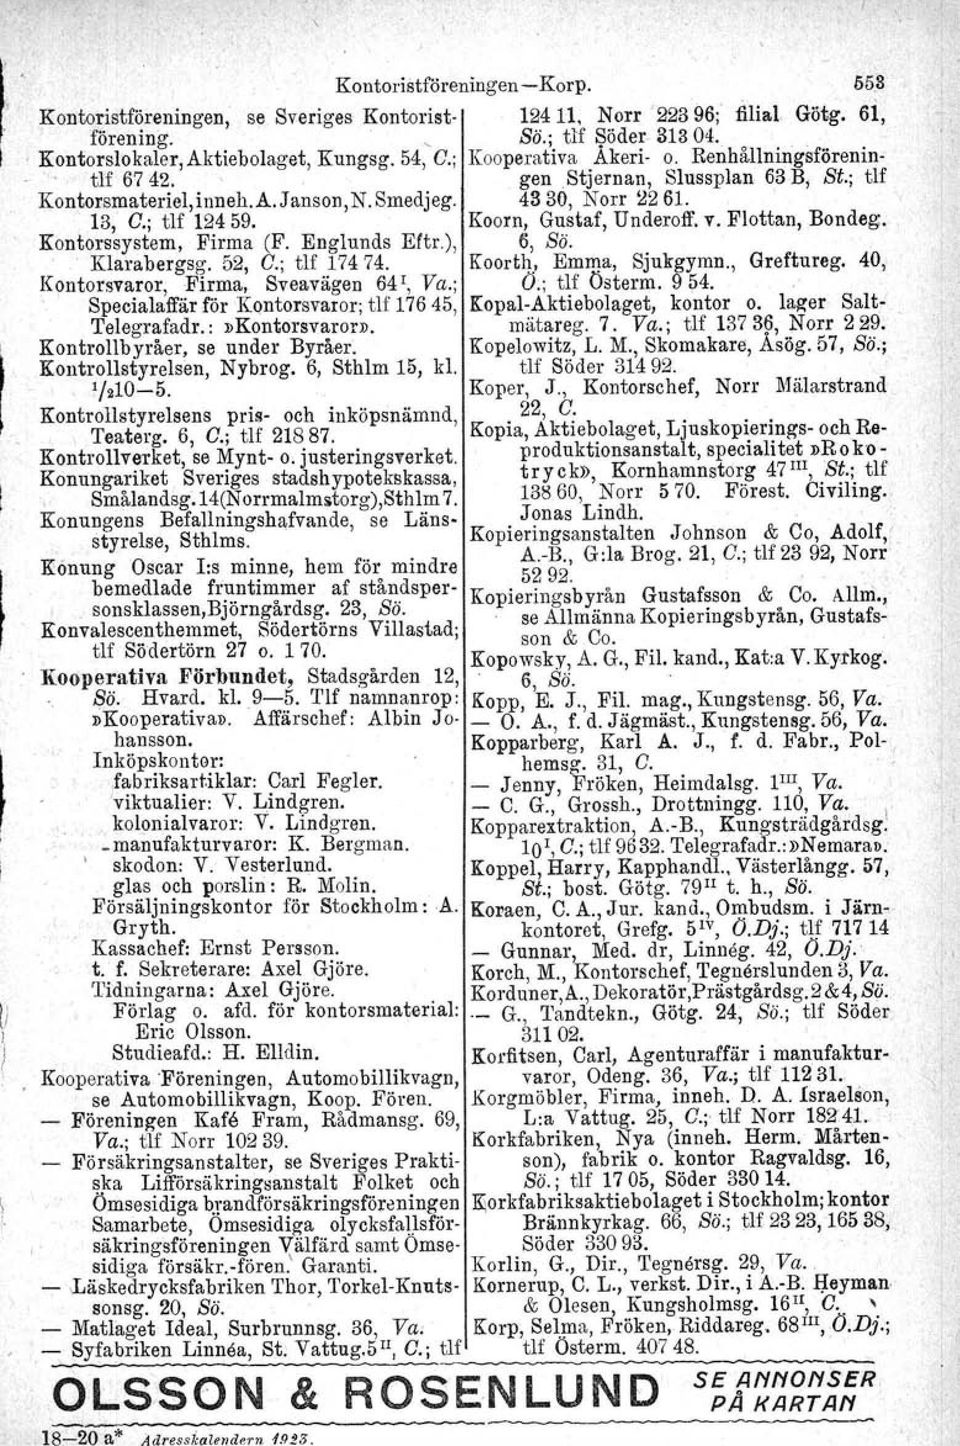 Koorn, Gustaf, Underoff v. Flottan, Bondeg., Kontorssystem, Firma (F. Englunds Eltr.), 6, Sä., Klarabergsg. 52, C.; tlf 17474. Koorth. EmII)a, Sjukgymn., Greftureg.